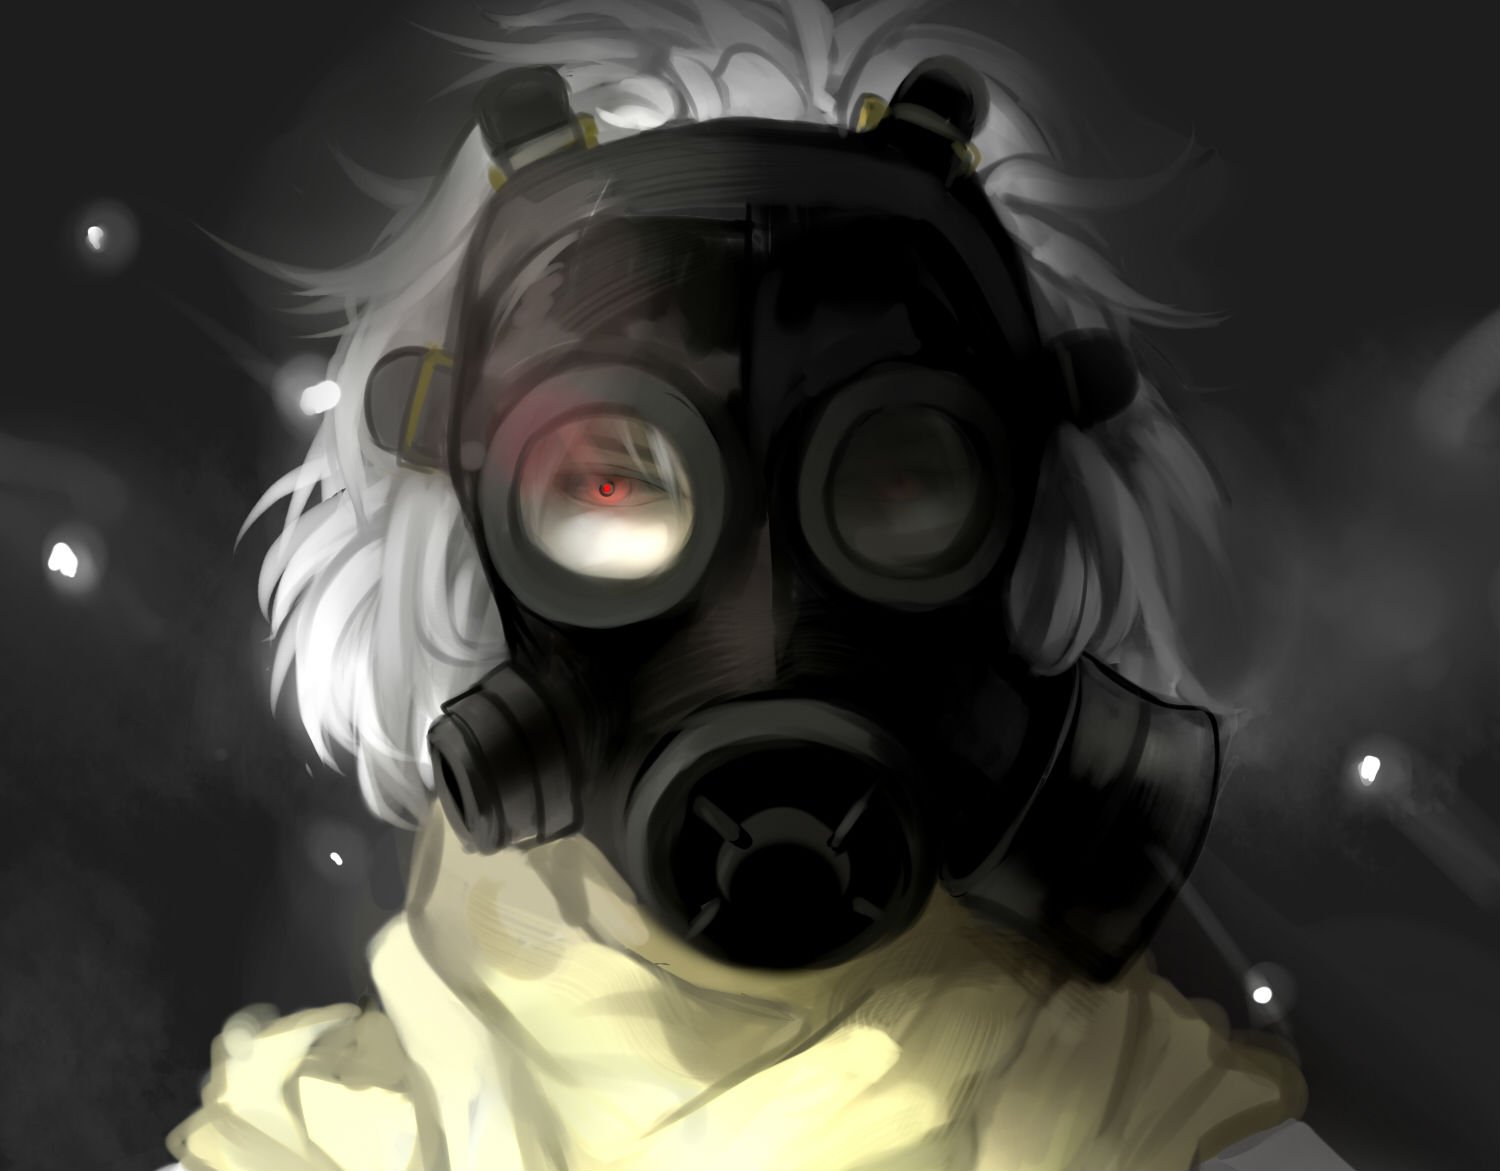 Download Gas Masks, Art Images, Art Pictures - Anime Gas Mask Render - Full  Size PNG Image - PNGkit